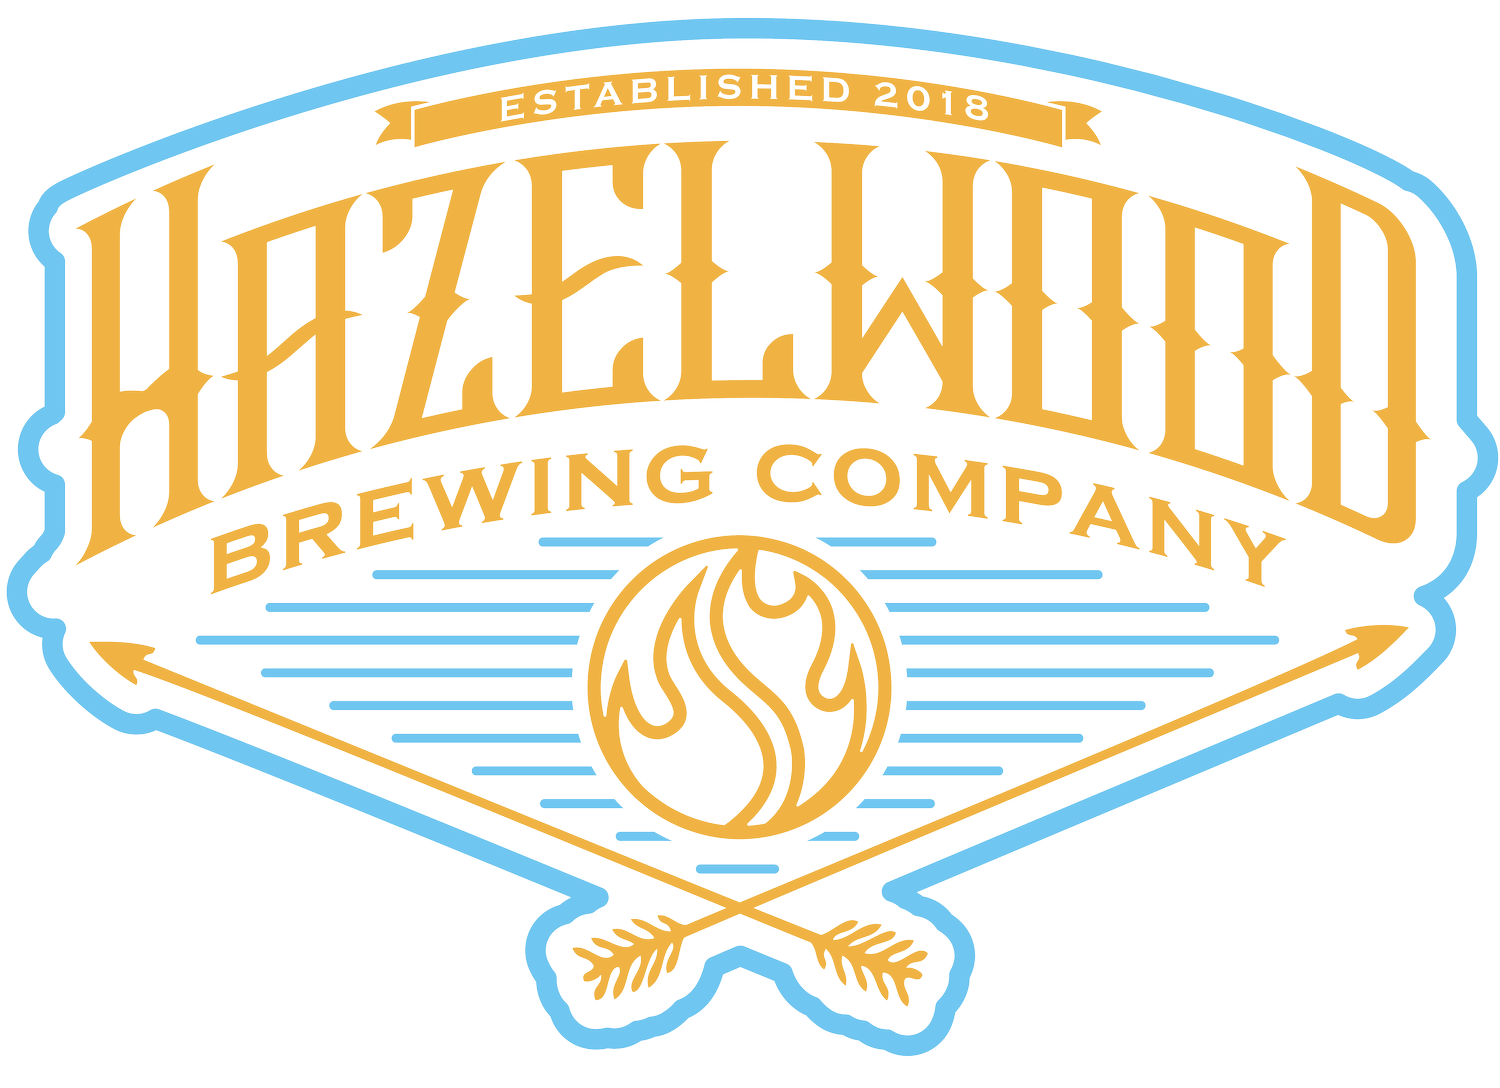 Hazelwood Brewing Company